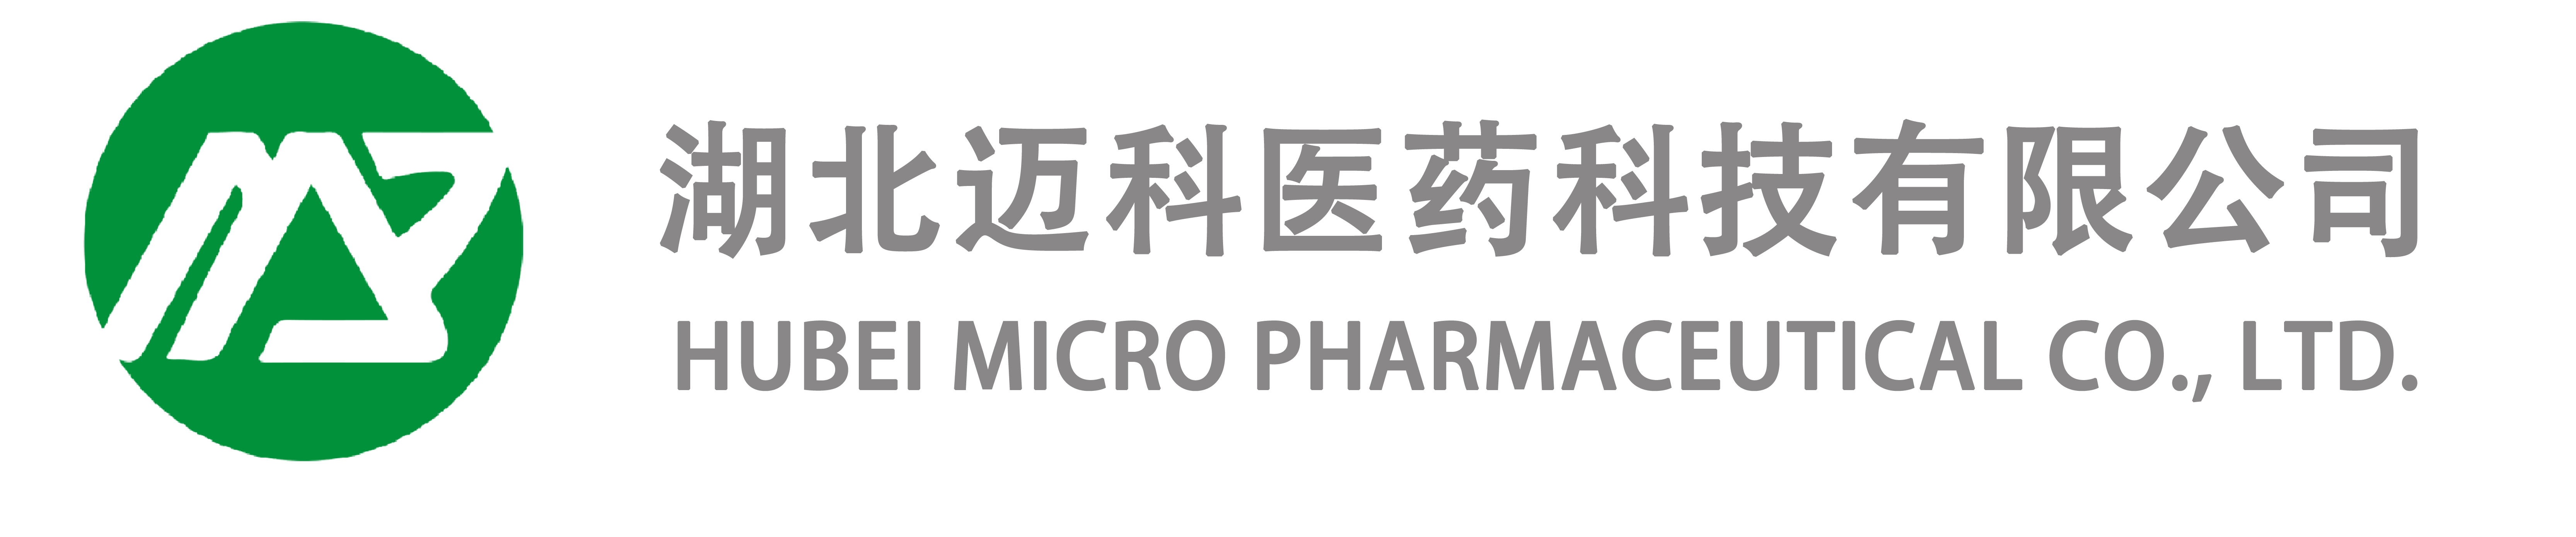 Hubei Micro Pharmaceutical Co., Ltd